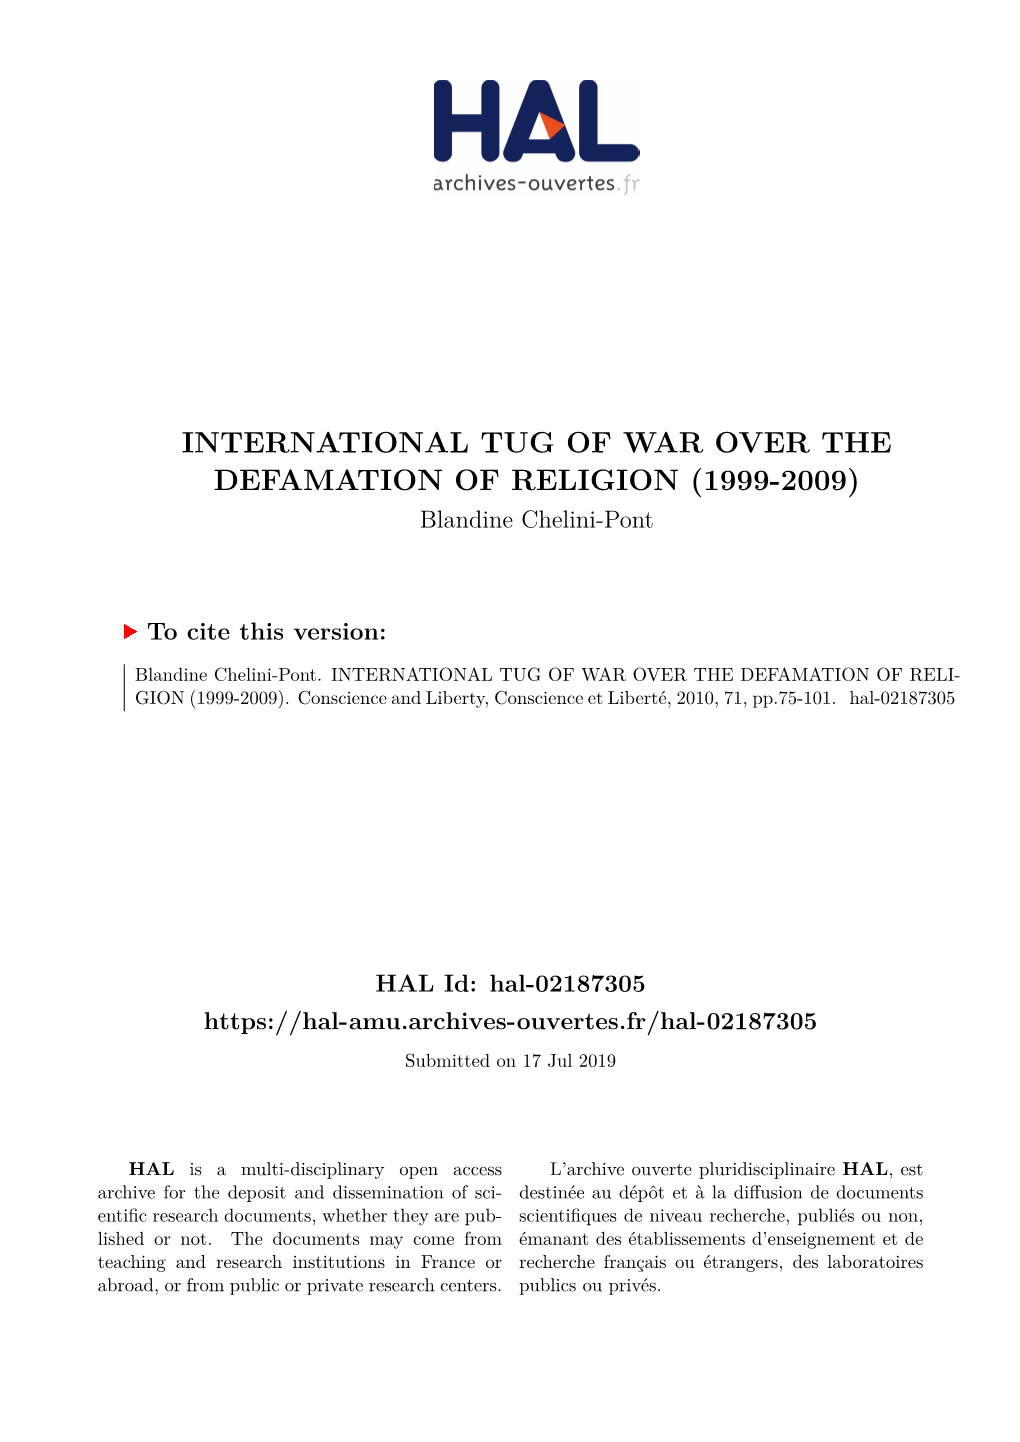 INTERNATIONAL TUG of WAR OVER the DEFAMATION of RELIGION (1999-2009) Blandine Chelini-Pont